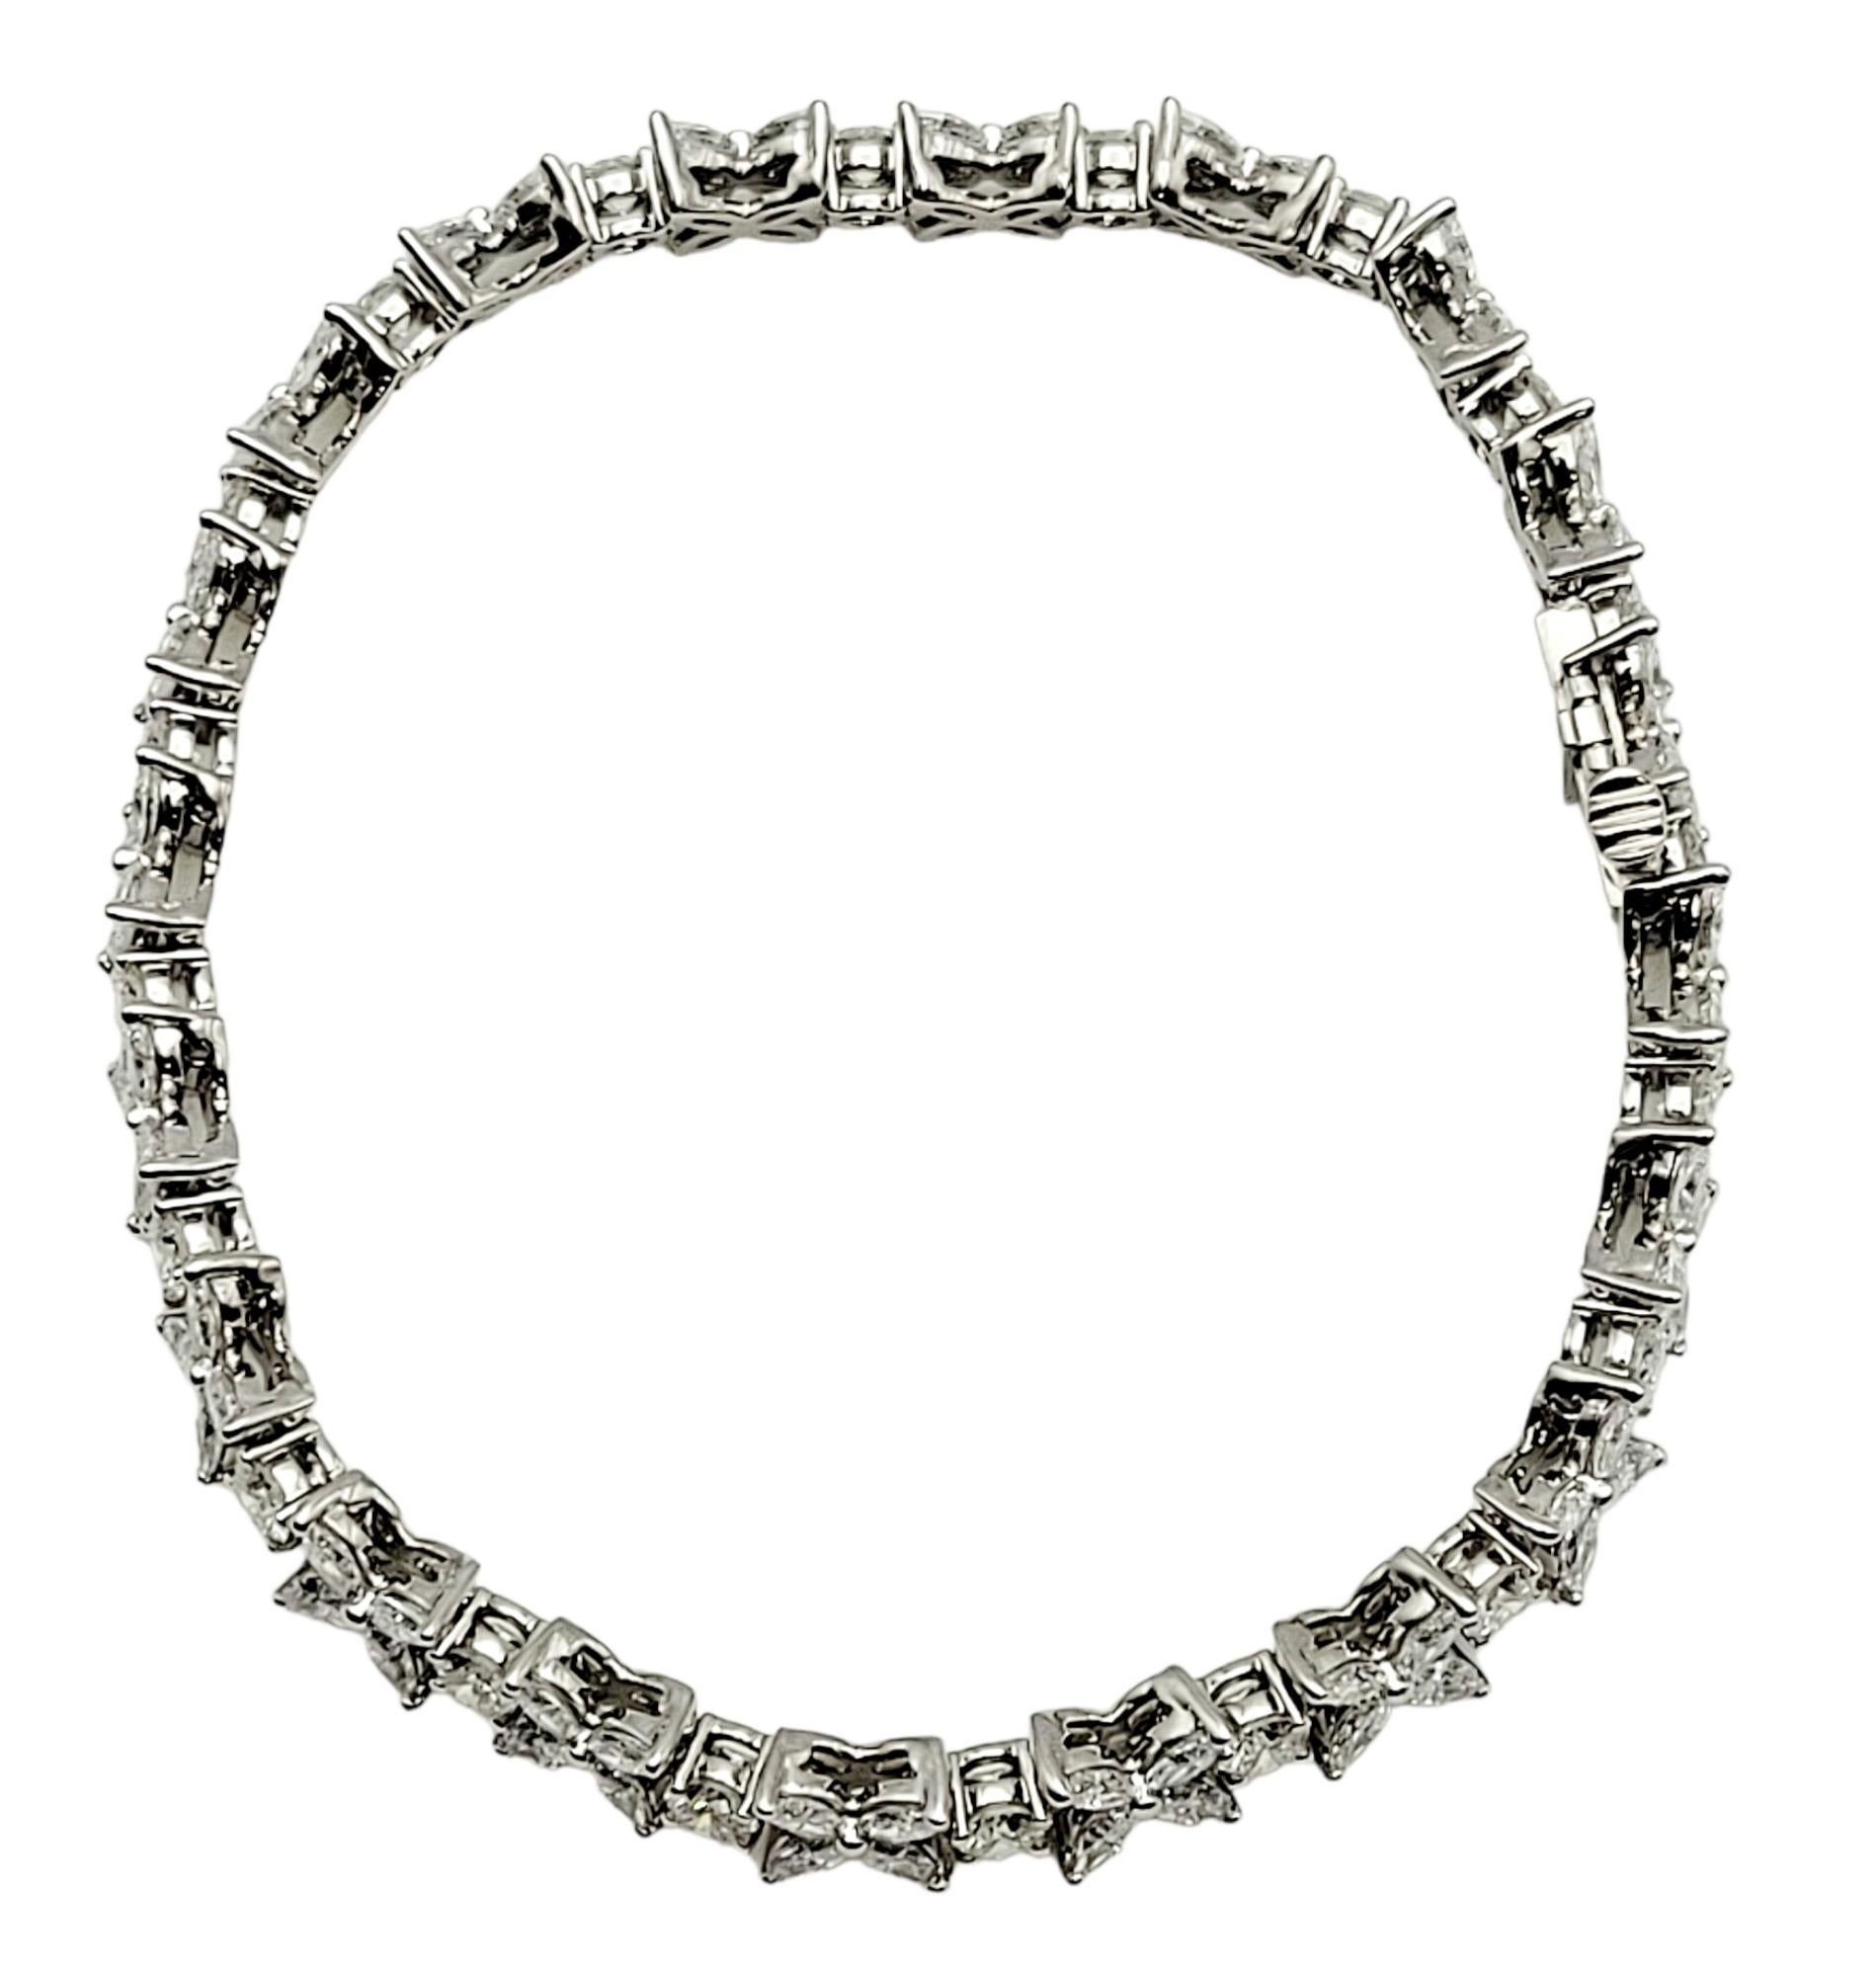 Contemporary Tiffany & Co. Victoria Cluster Diamond Tennis Bracelet 6.01 Carats in Platinum